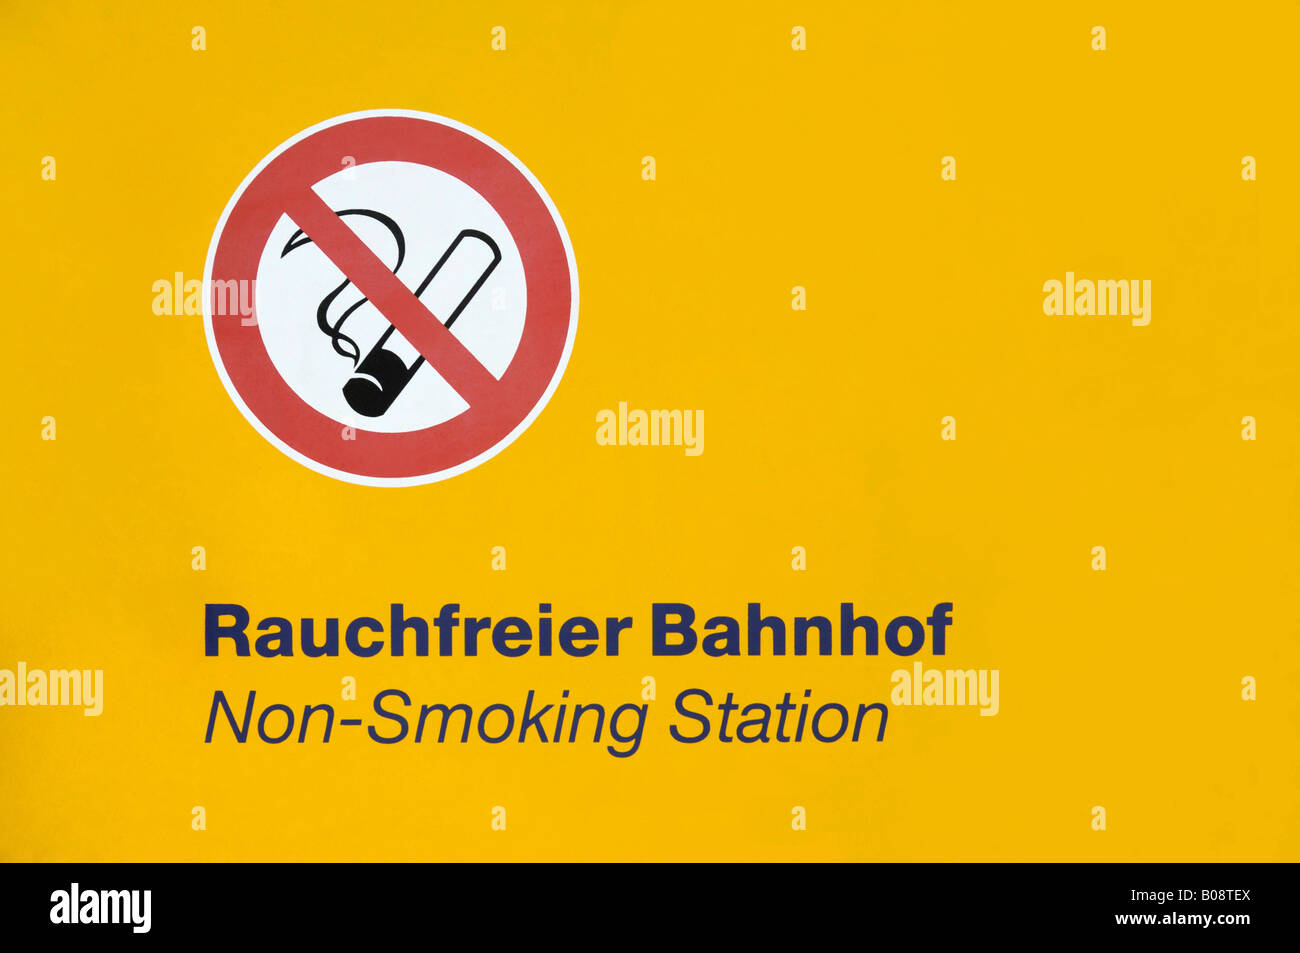 No smoking sign, Rauchfreier Bahnhof, Non-Smoking Station Stock Photo